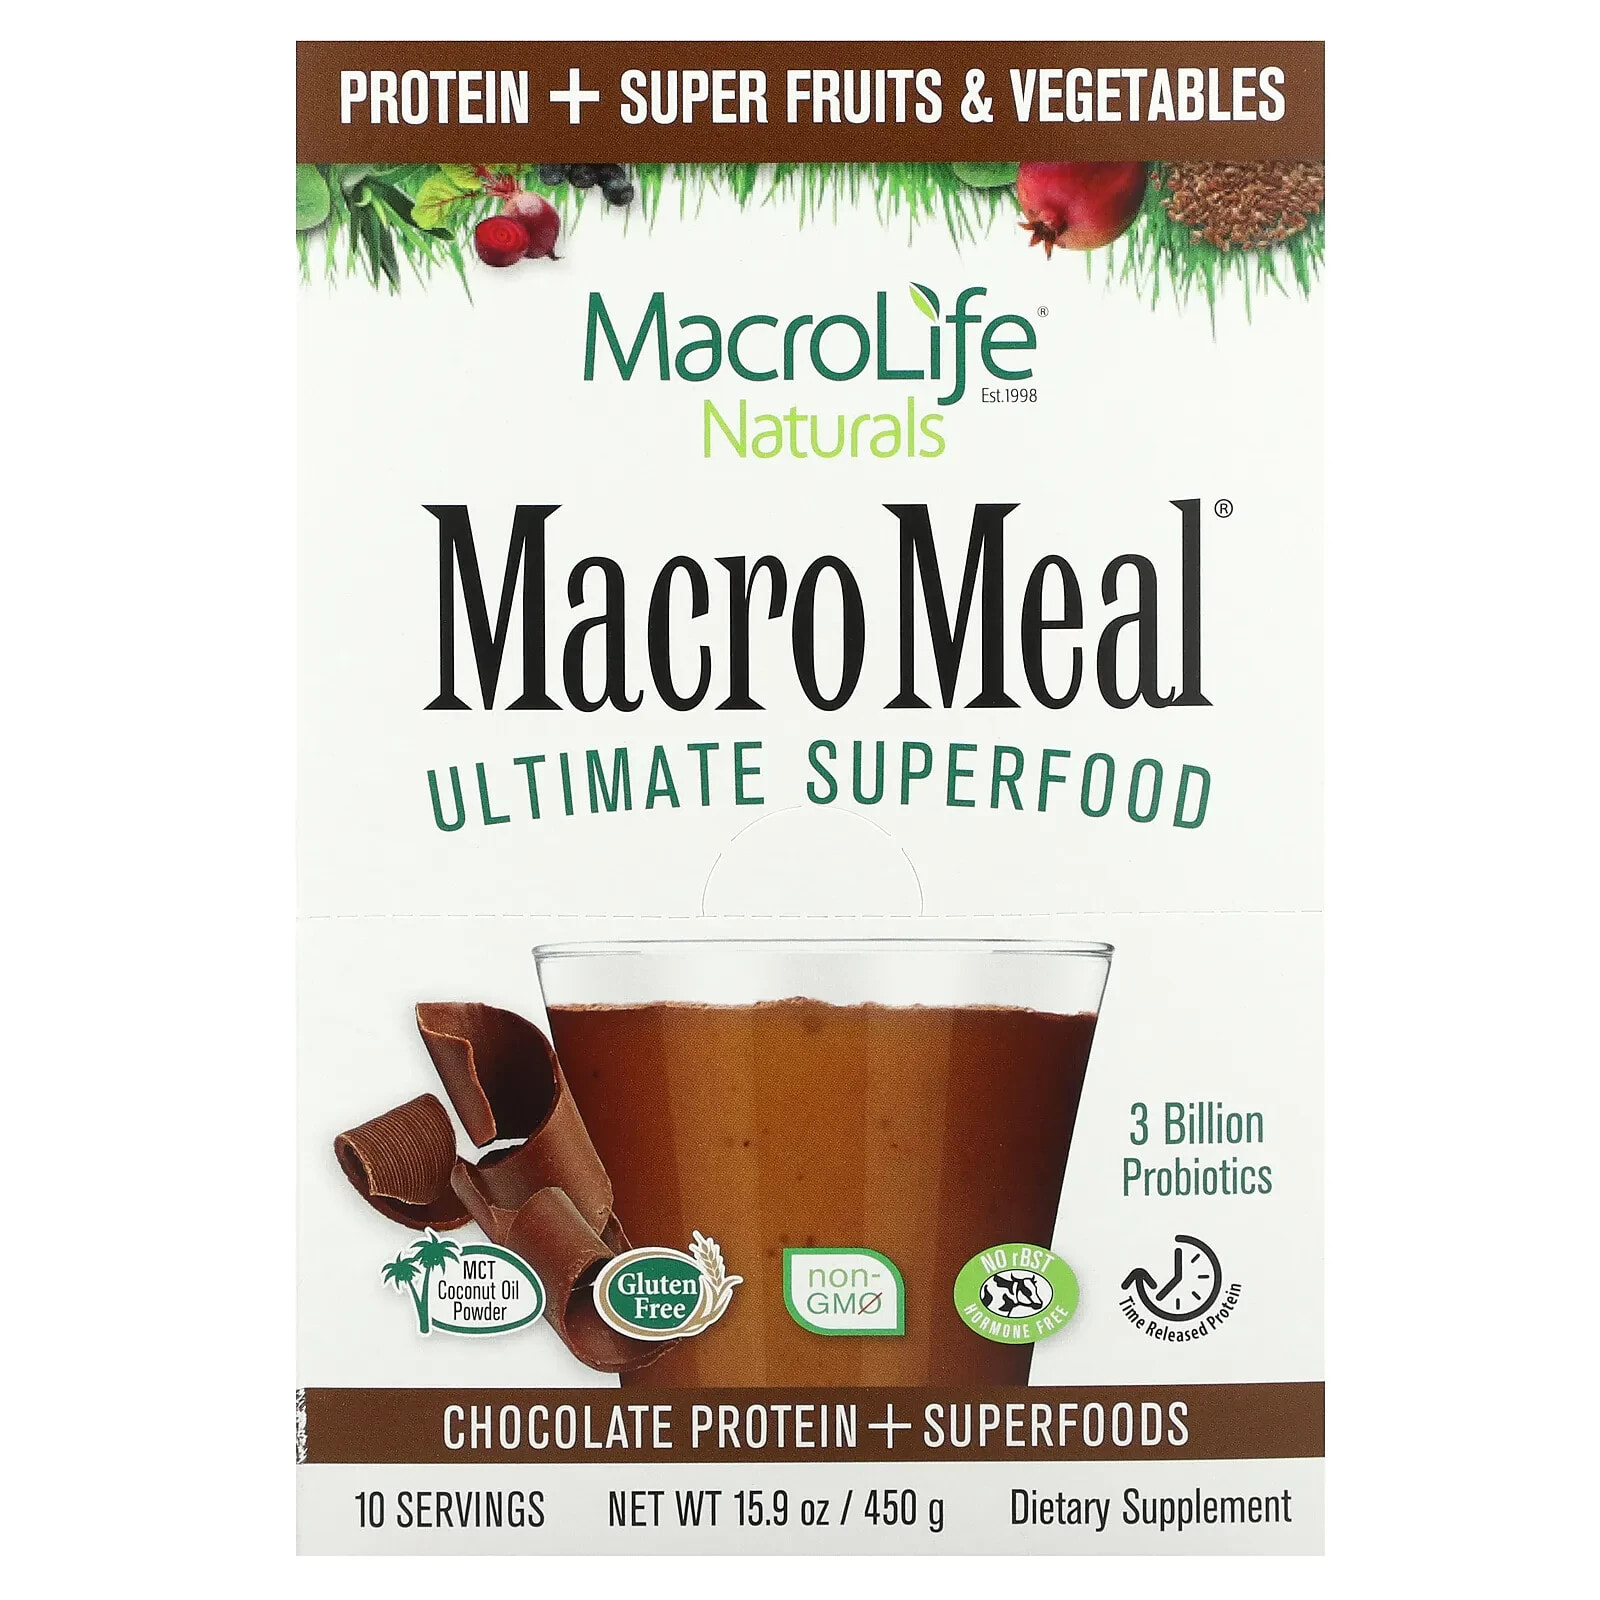 Макролайф Натуралс, Macro Meal Ultimate Superfood, шоколадный протеин + суперпища, 10 пакетов, 15.9 унц.(450 г.) (Товар снят с продажи) 